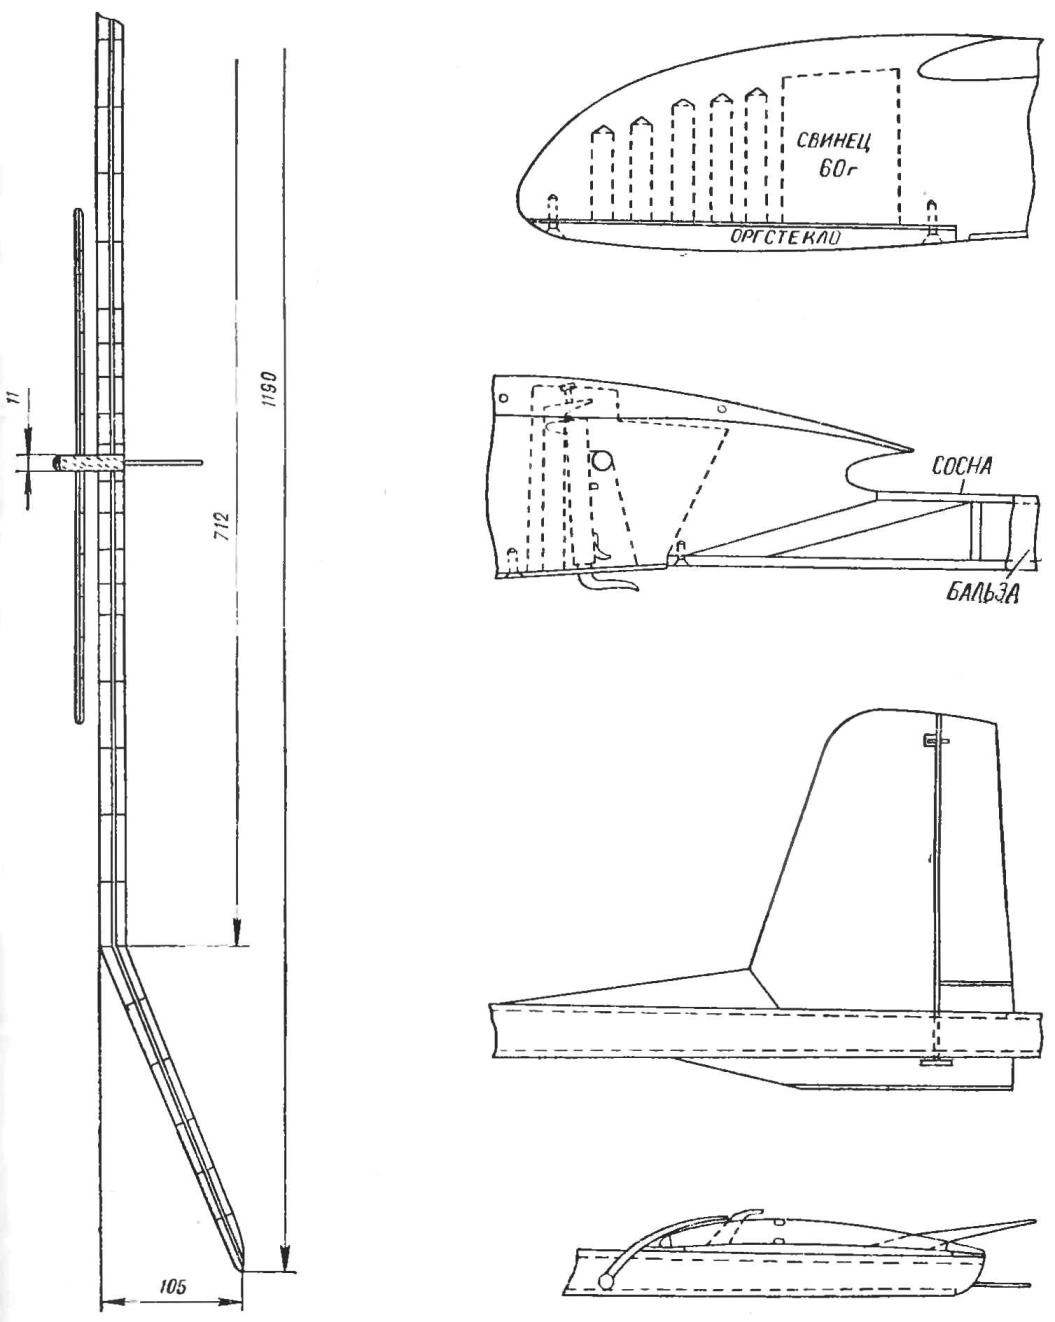 A1 class Glider model